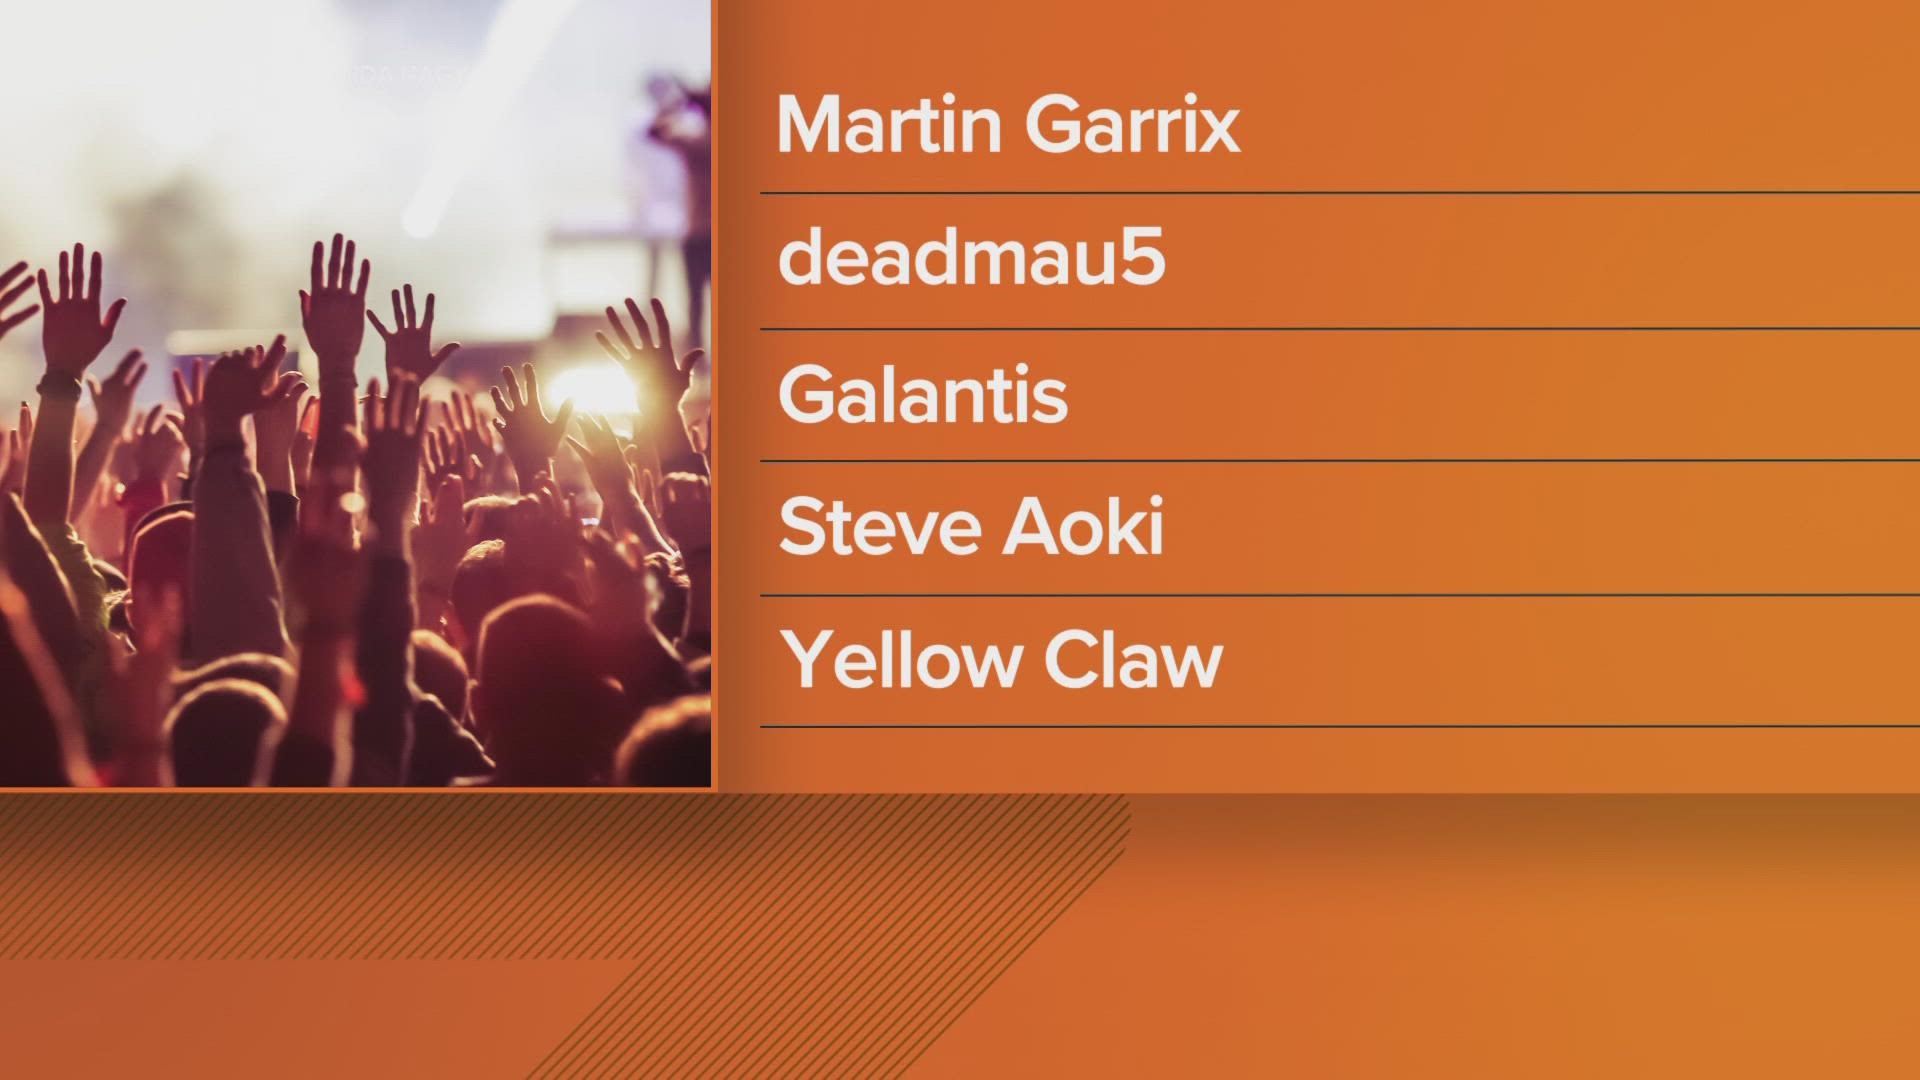 DJ Martin Garrix headlines the Snake Pit list of performers.